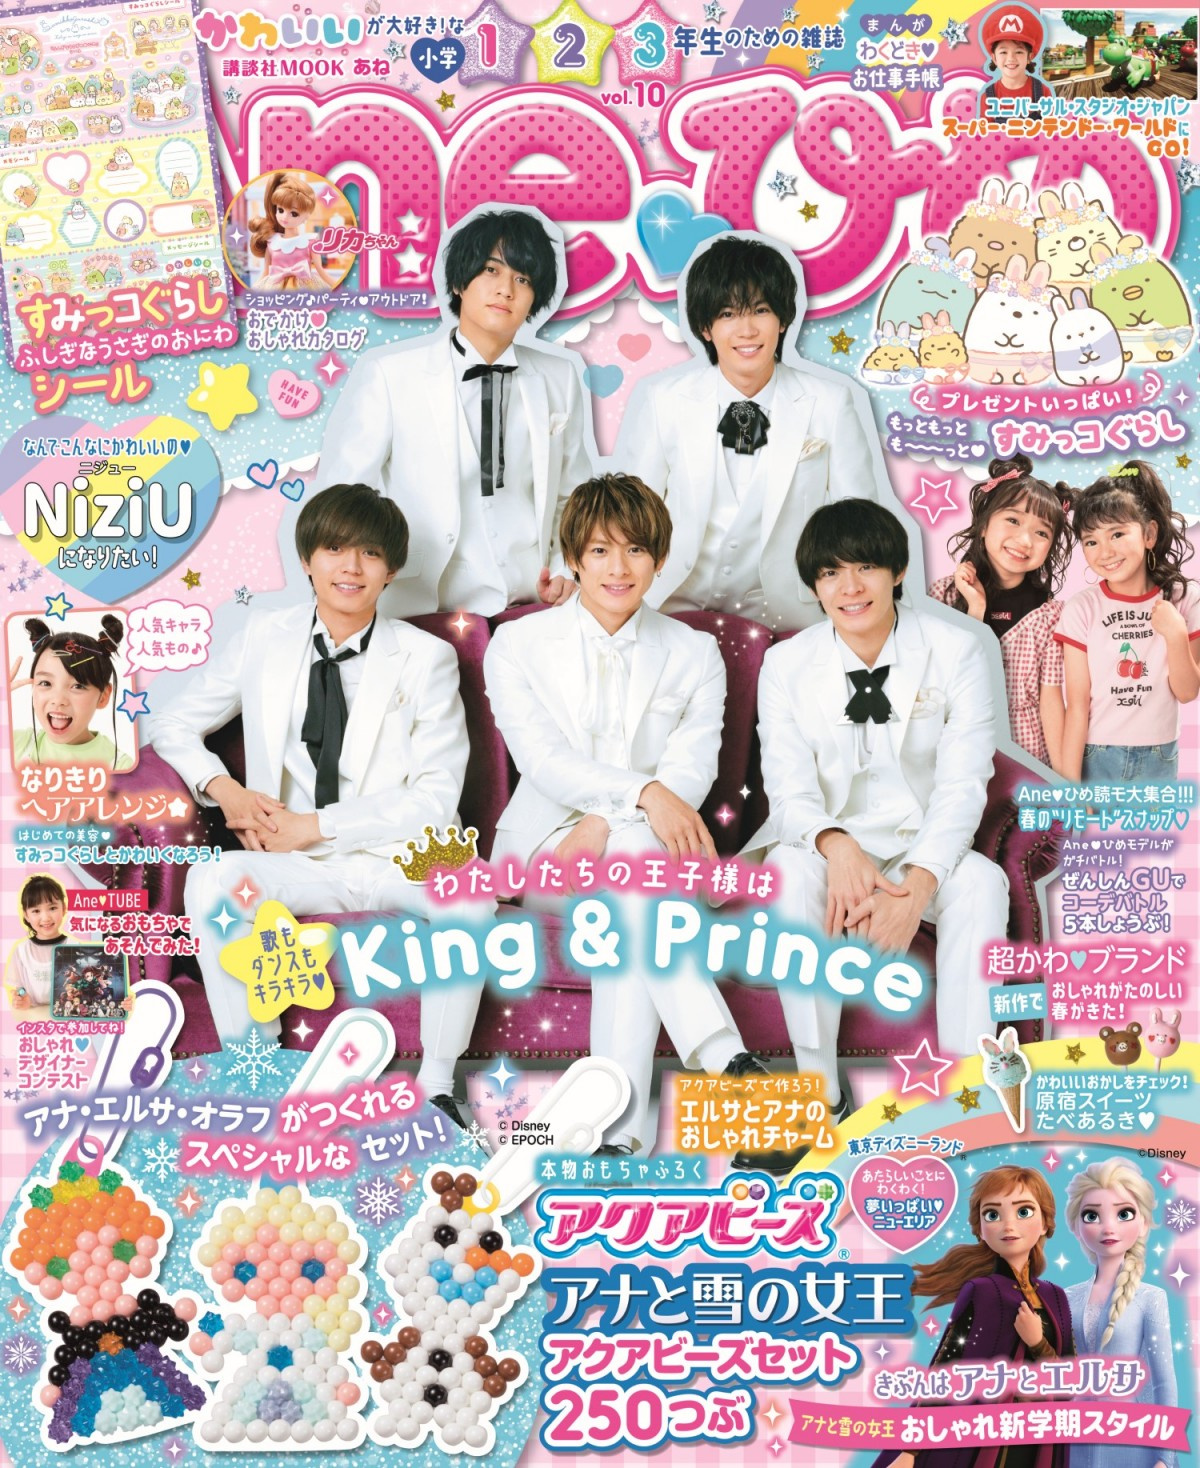 King Prince表紙のjs雑誌 Aneひめ 発売前重版が緊急決定 童話の王子様になりきり Oricon News